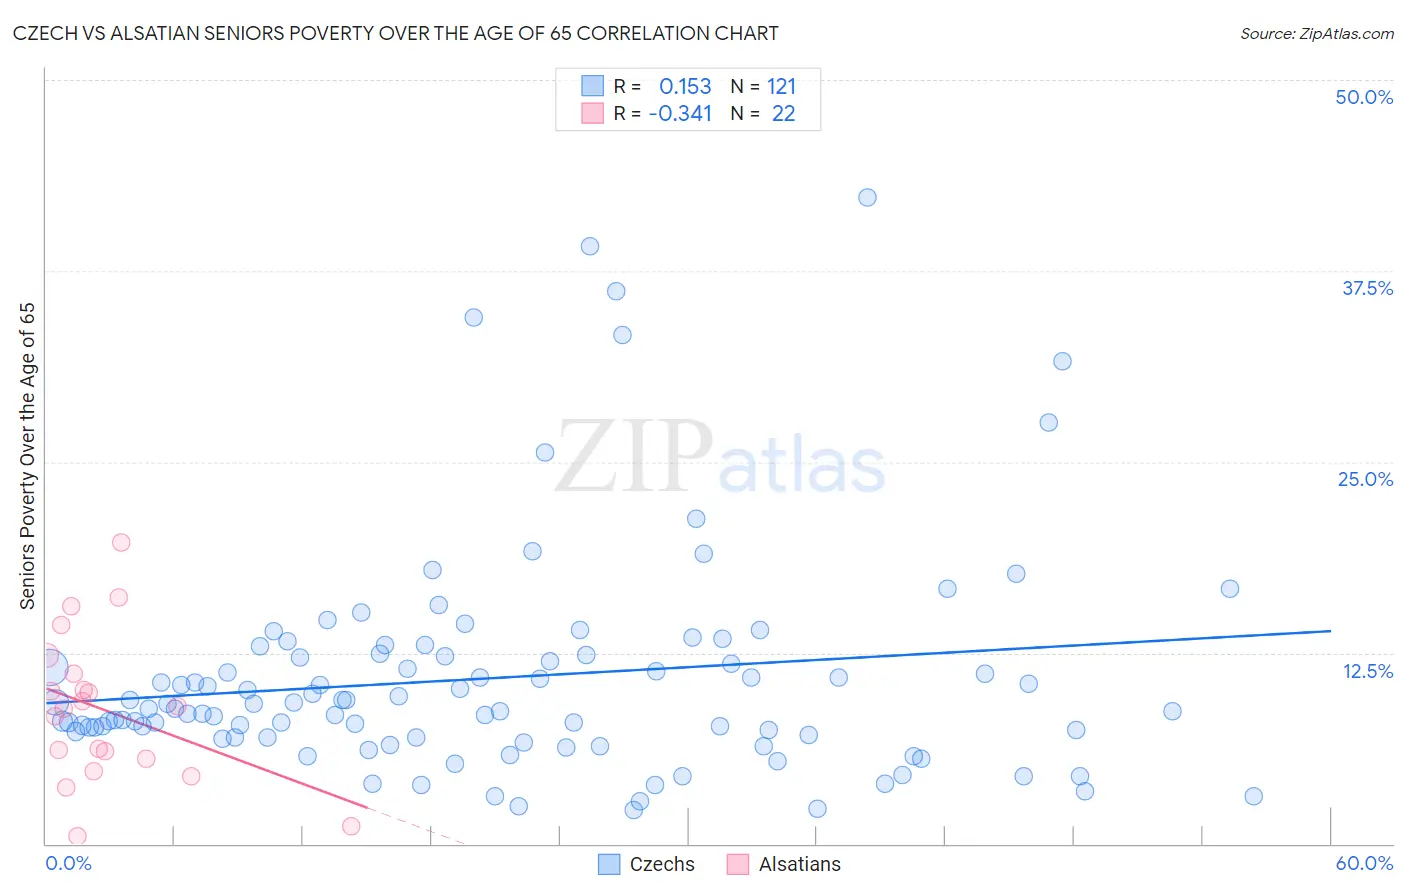 Czech vs Alsatian Seniors Poverty Over the Age of 65